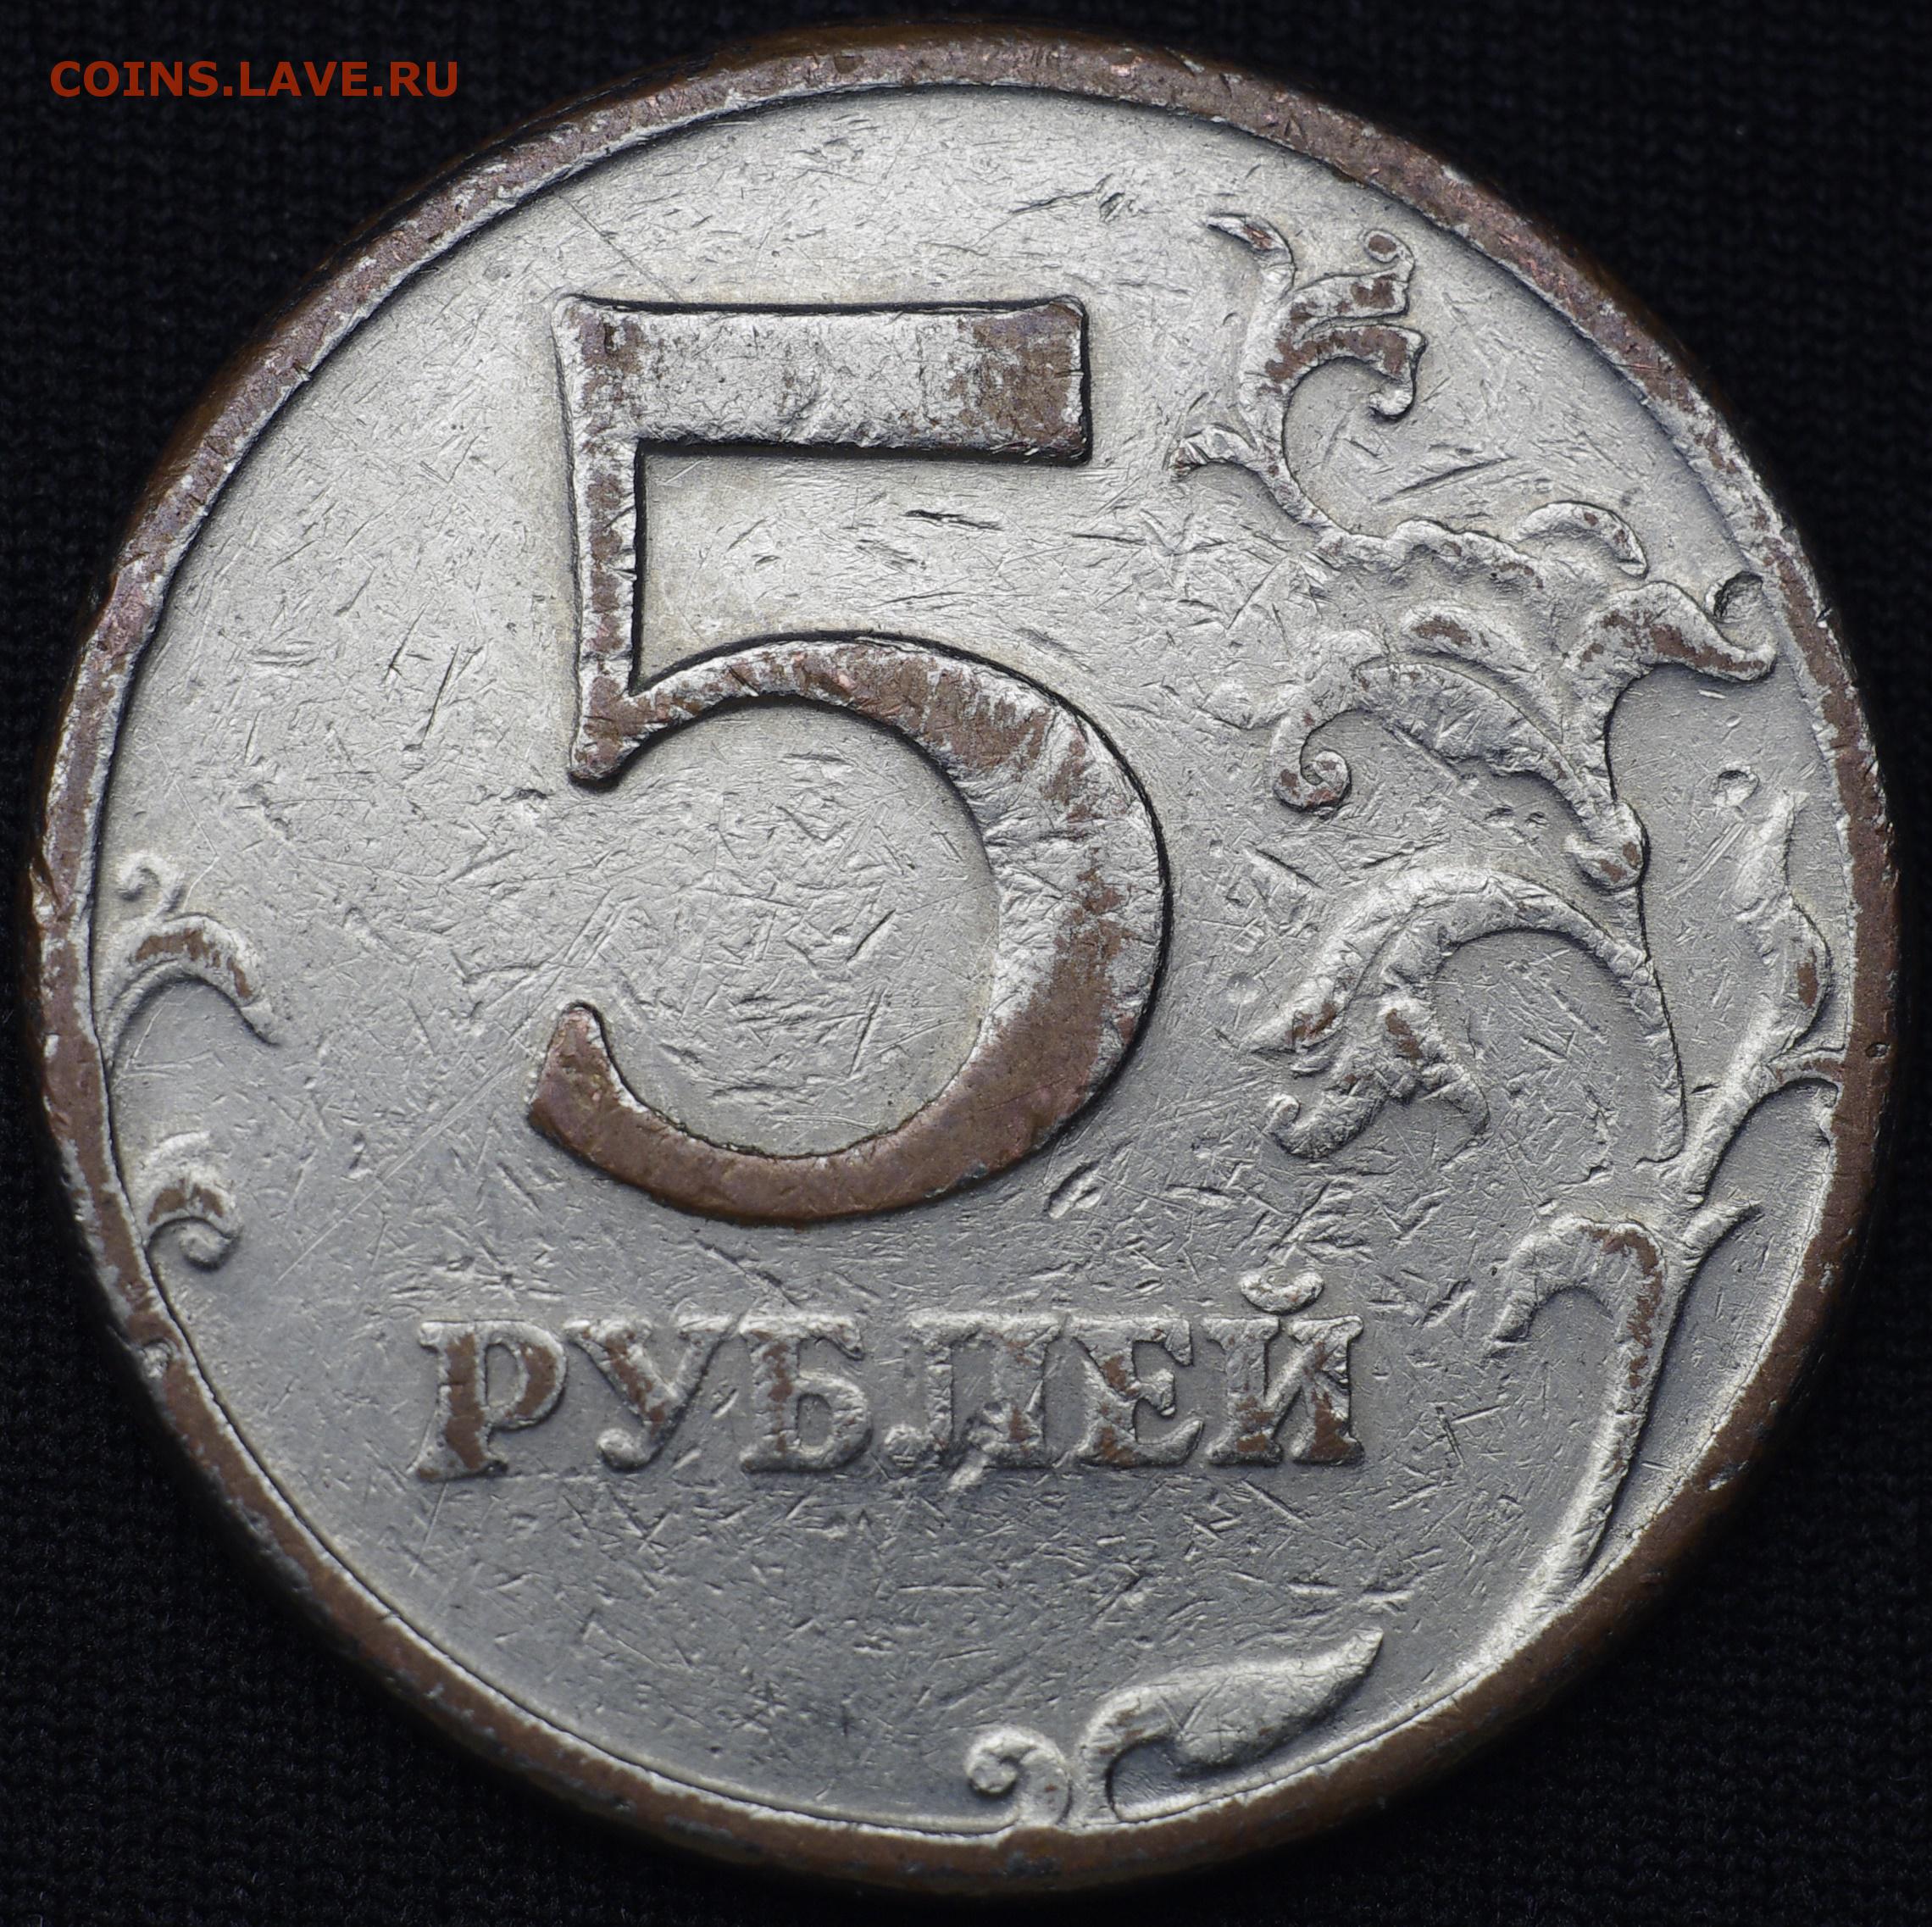 5 рублей россии 1997. Монета 5 рублей 1997 ММД. Пять рублей 1997. 5 Рублей 1997 ММД. ММД на 5 руб 1997.